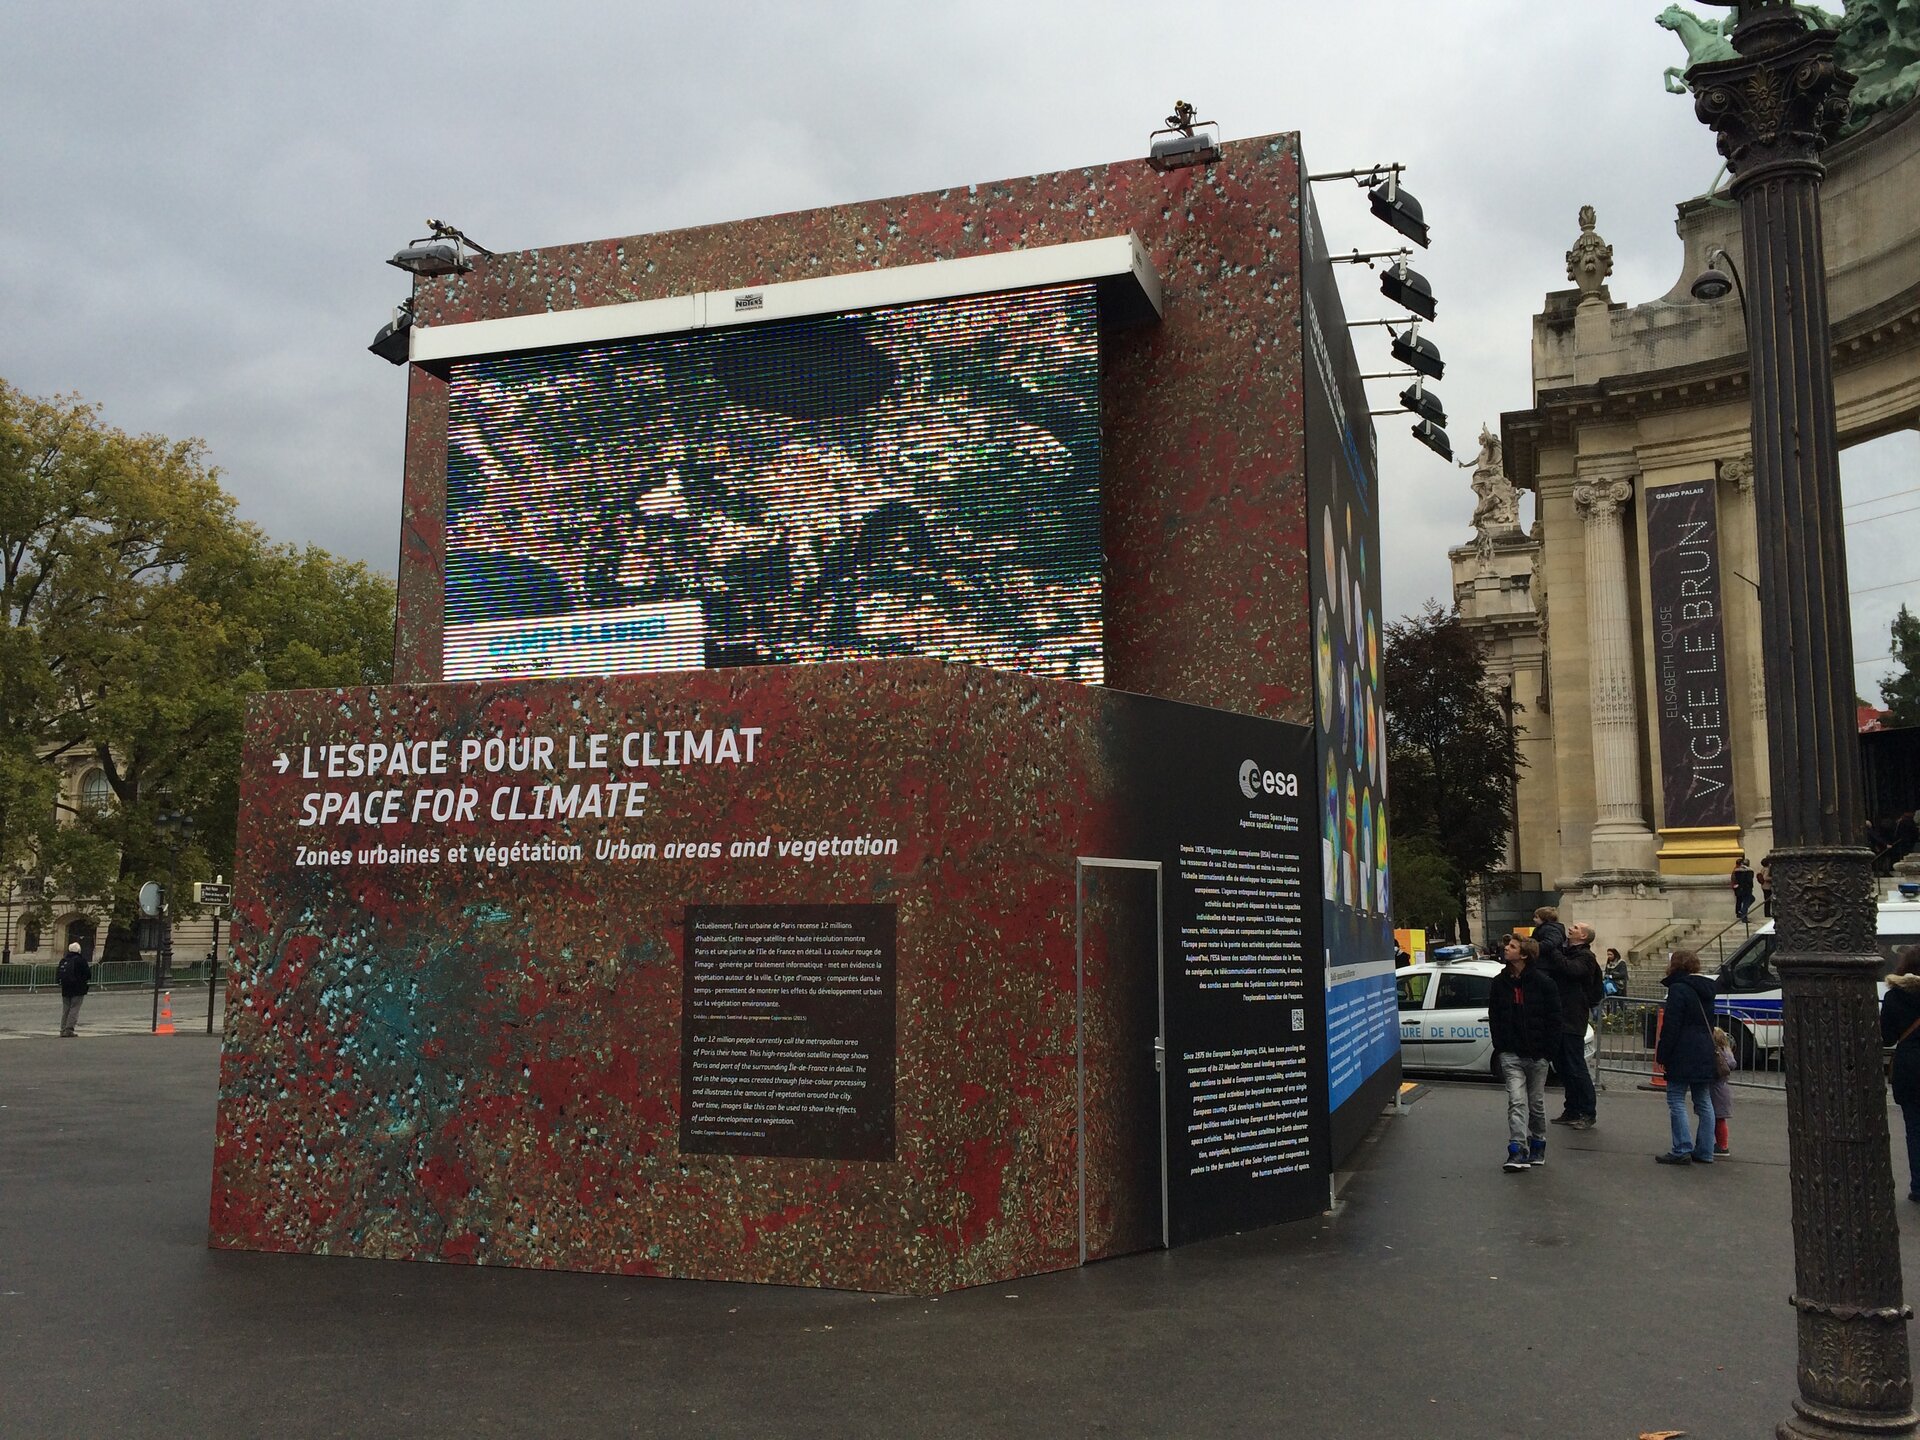 Exhibit on "Space for Climate" at the Champs-Elysées Avenue in Paris